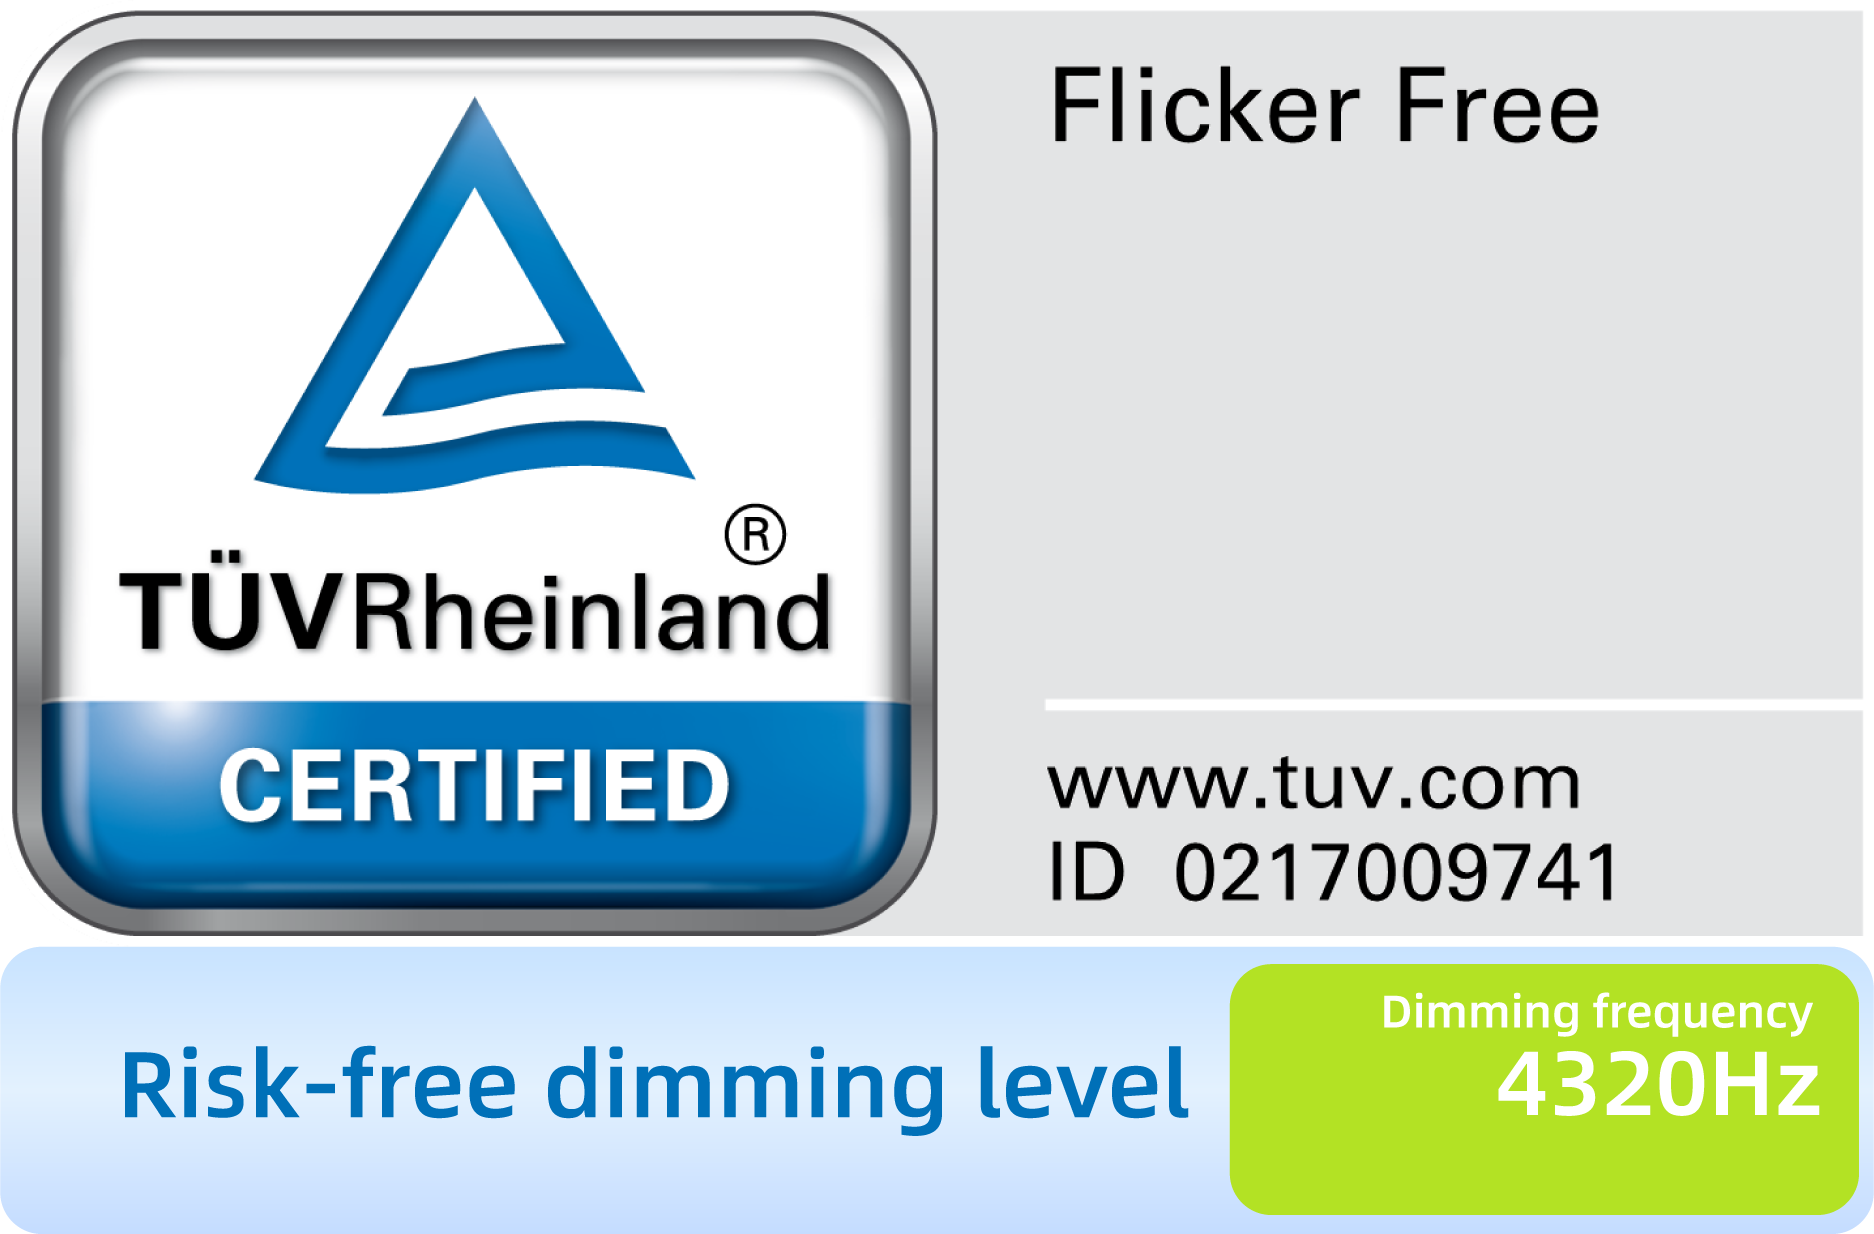 TÜV Rheinland sertifikat za uklanjanje treperenja.